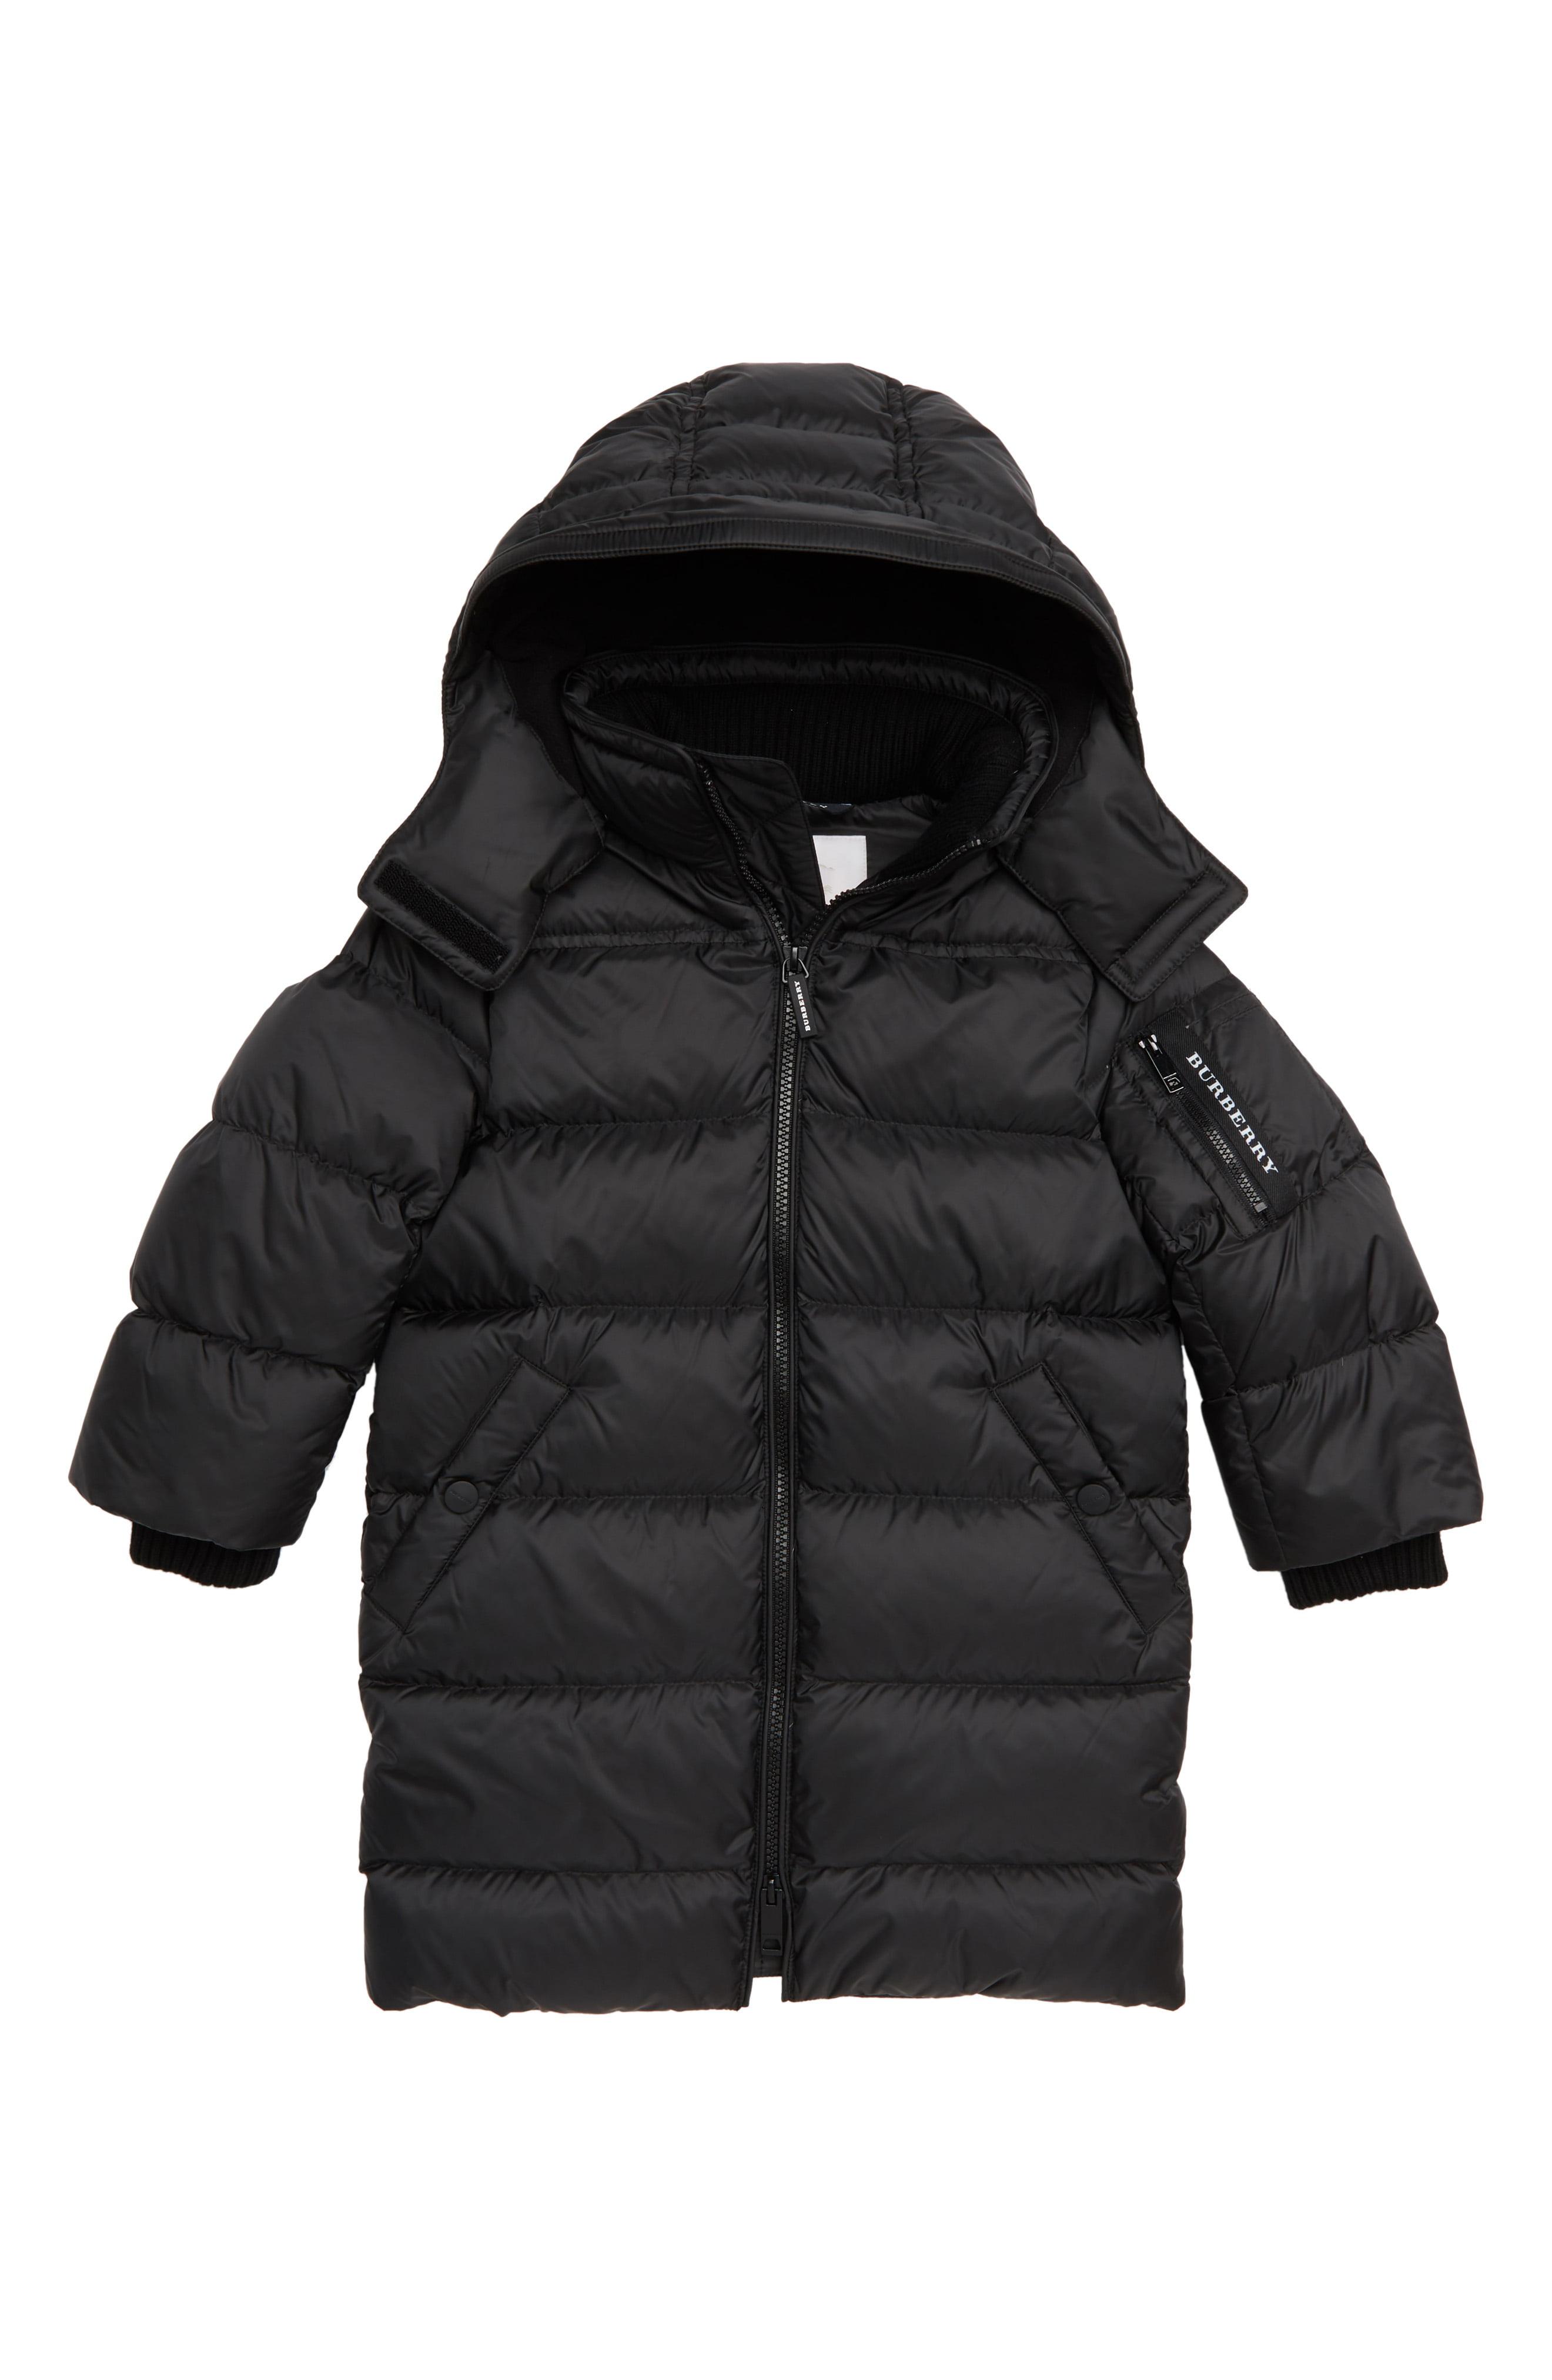 Burberry Waterproof Down Puffer Coat in Black for Men - Lyst